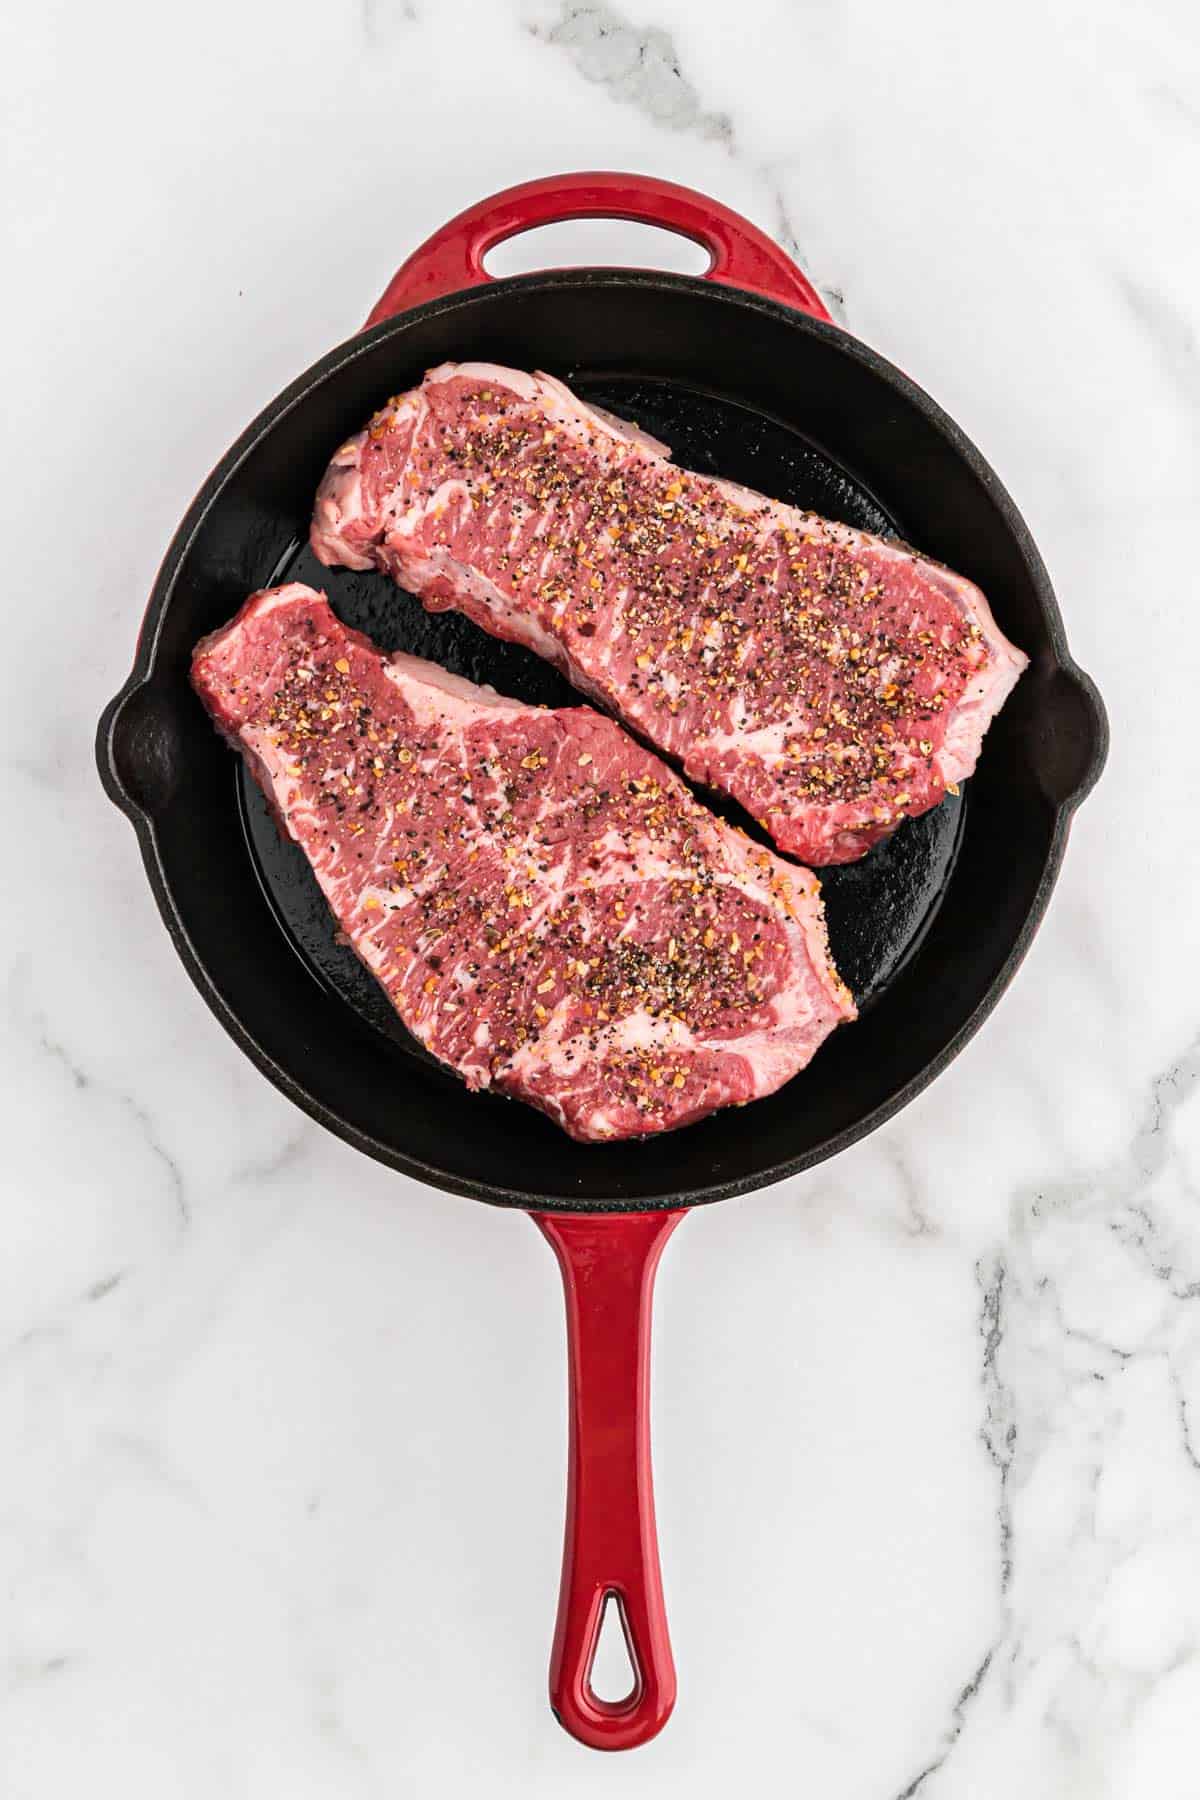 Steaks cooking in a pan.